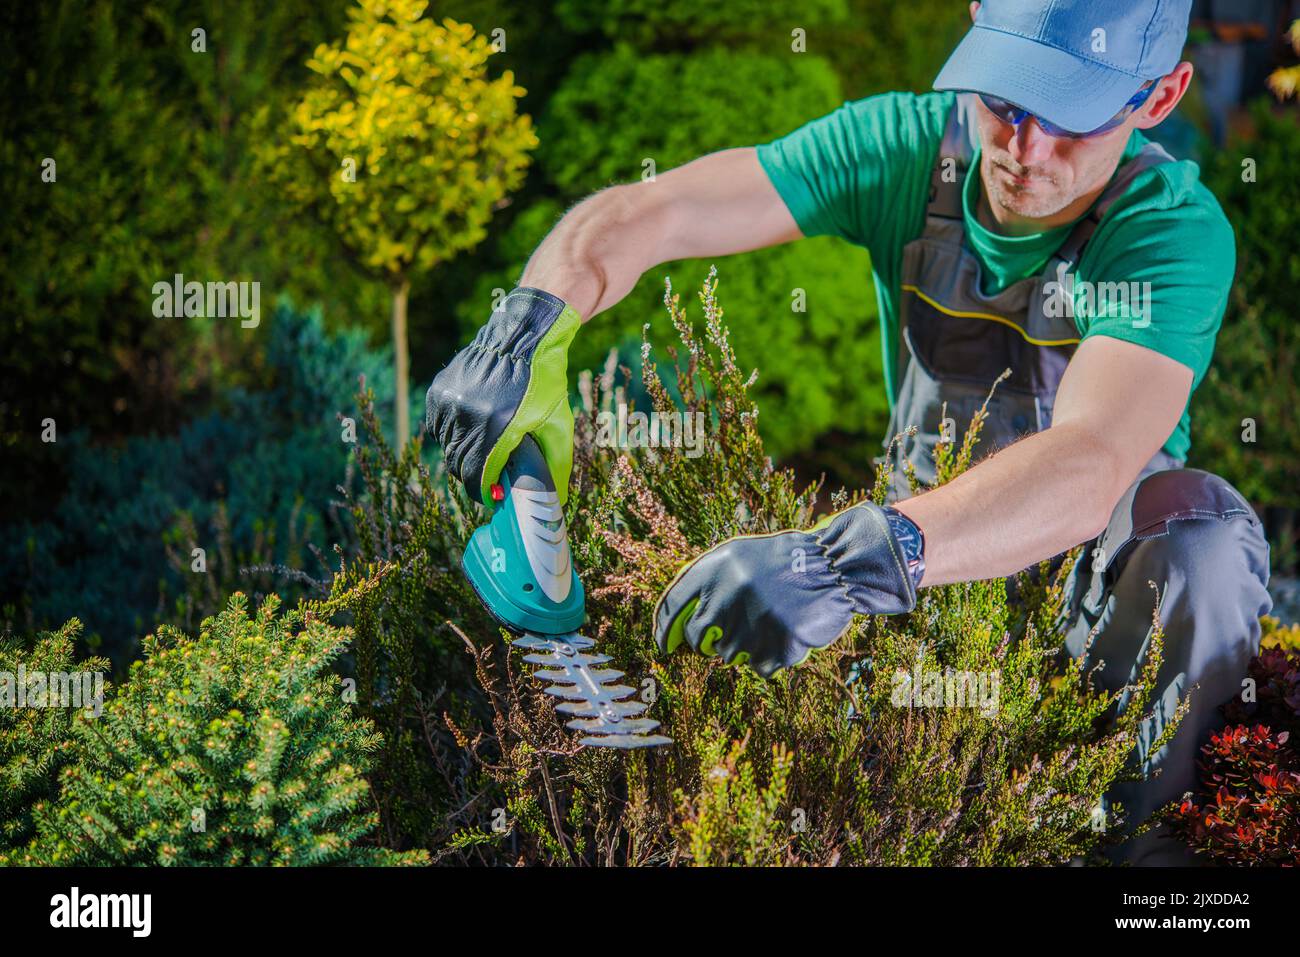 Caucasian Gardener Focused on Shaping Plant Using Hand Held Shrub Trimmer Gardening Tool. Garden Care and Maintenance Work. Professional Gardening Equ Stock Photo